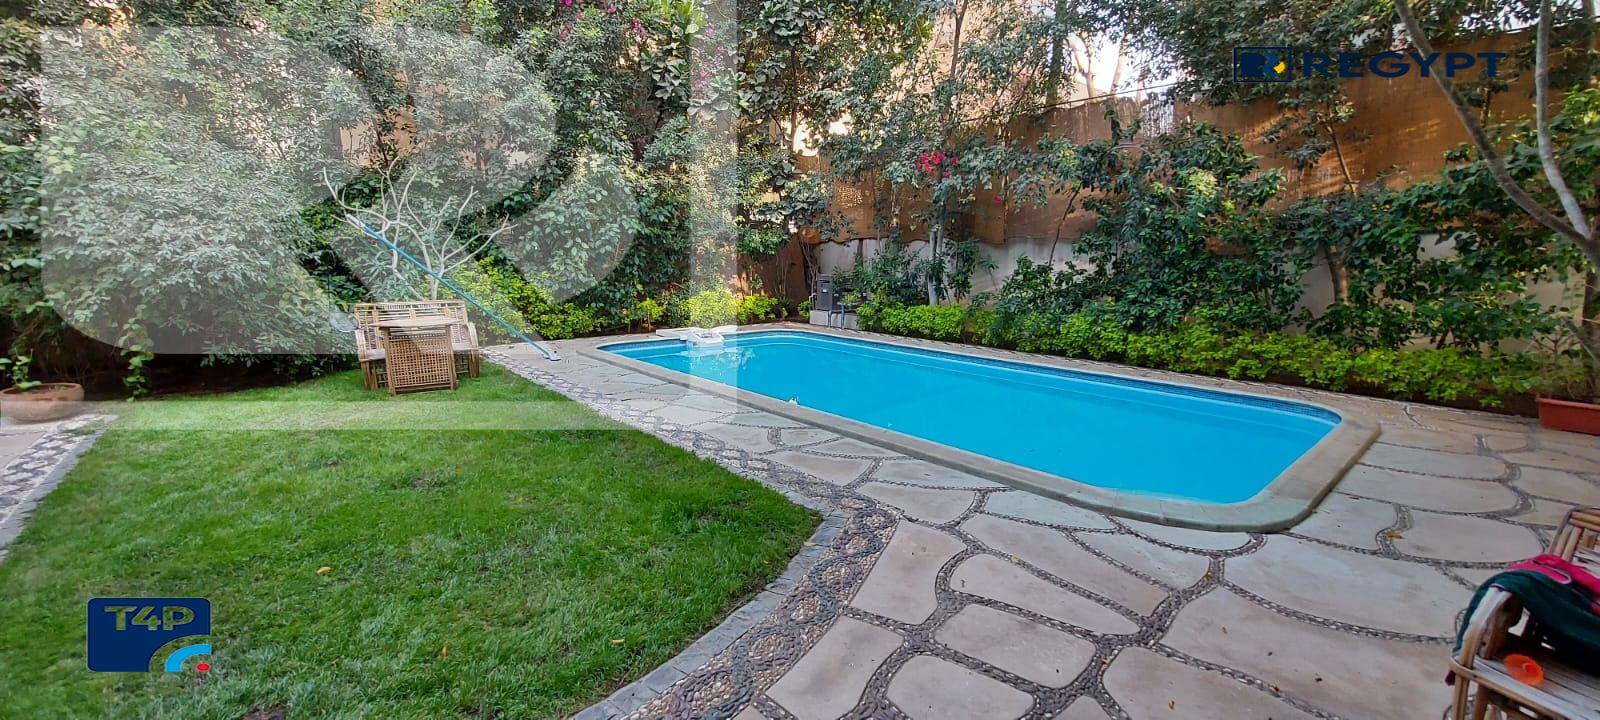 villa with pool for rent in degla el maadi